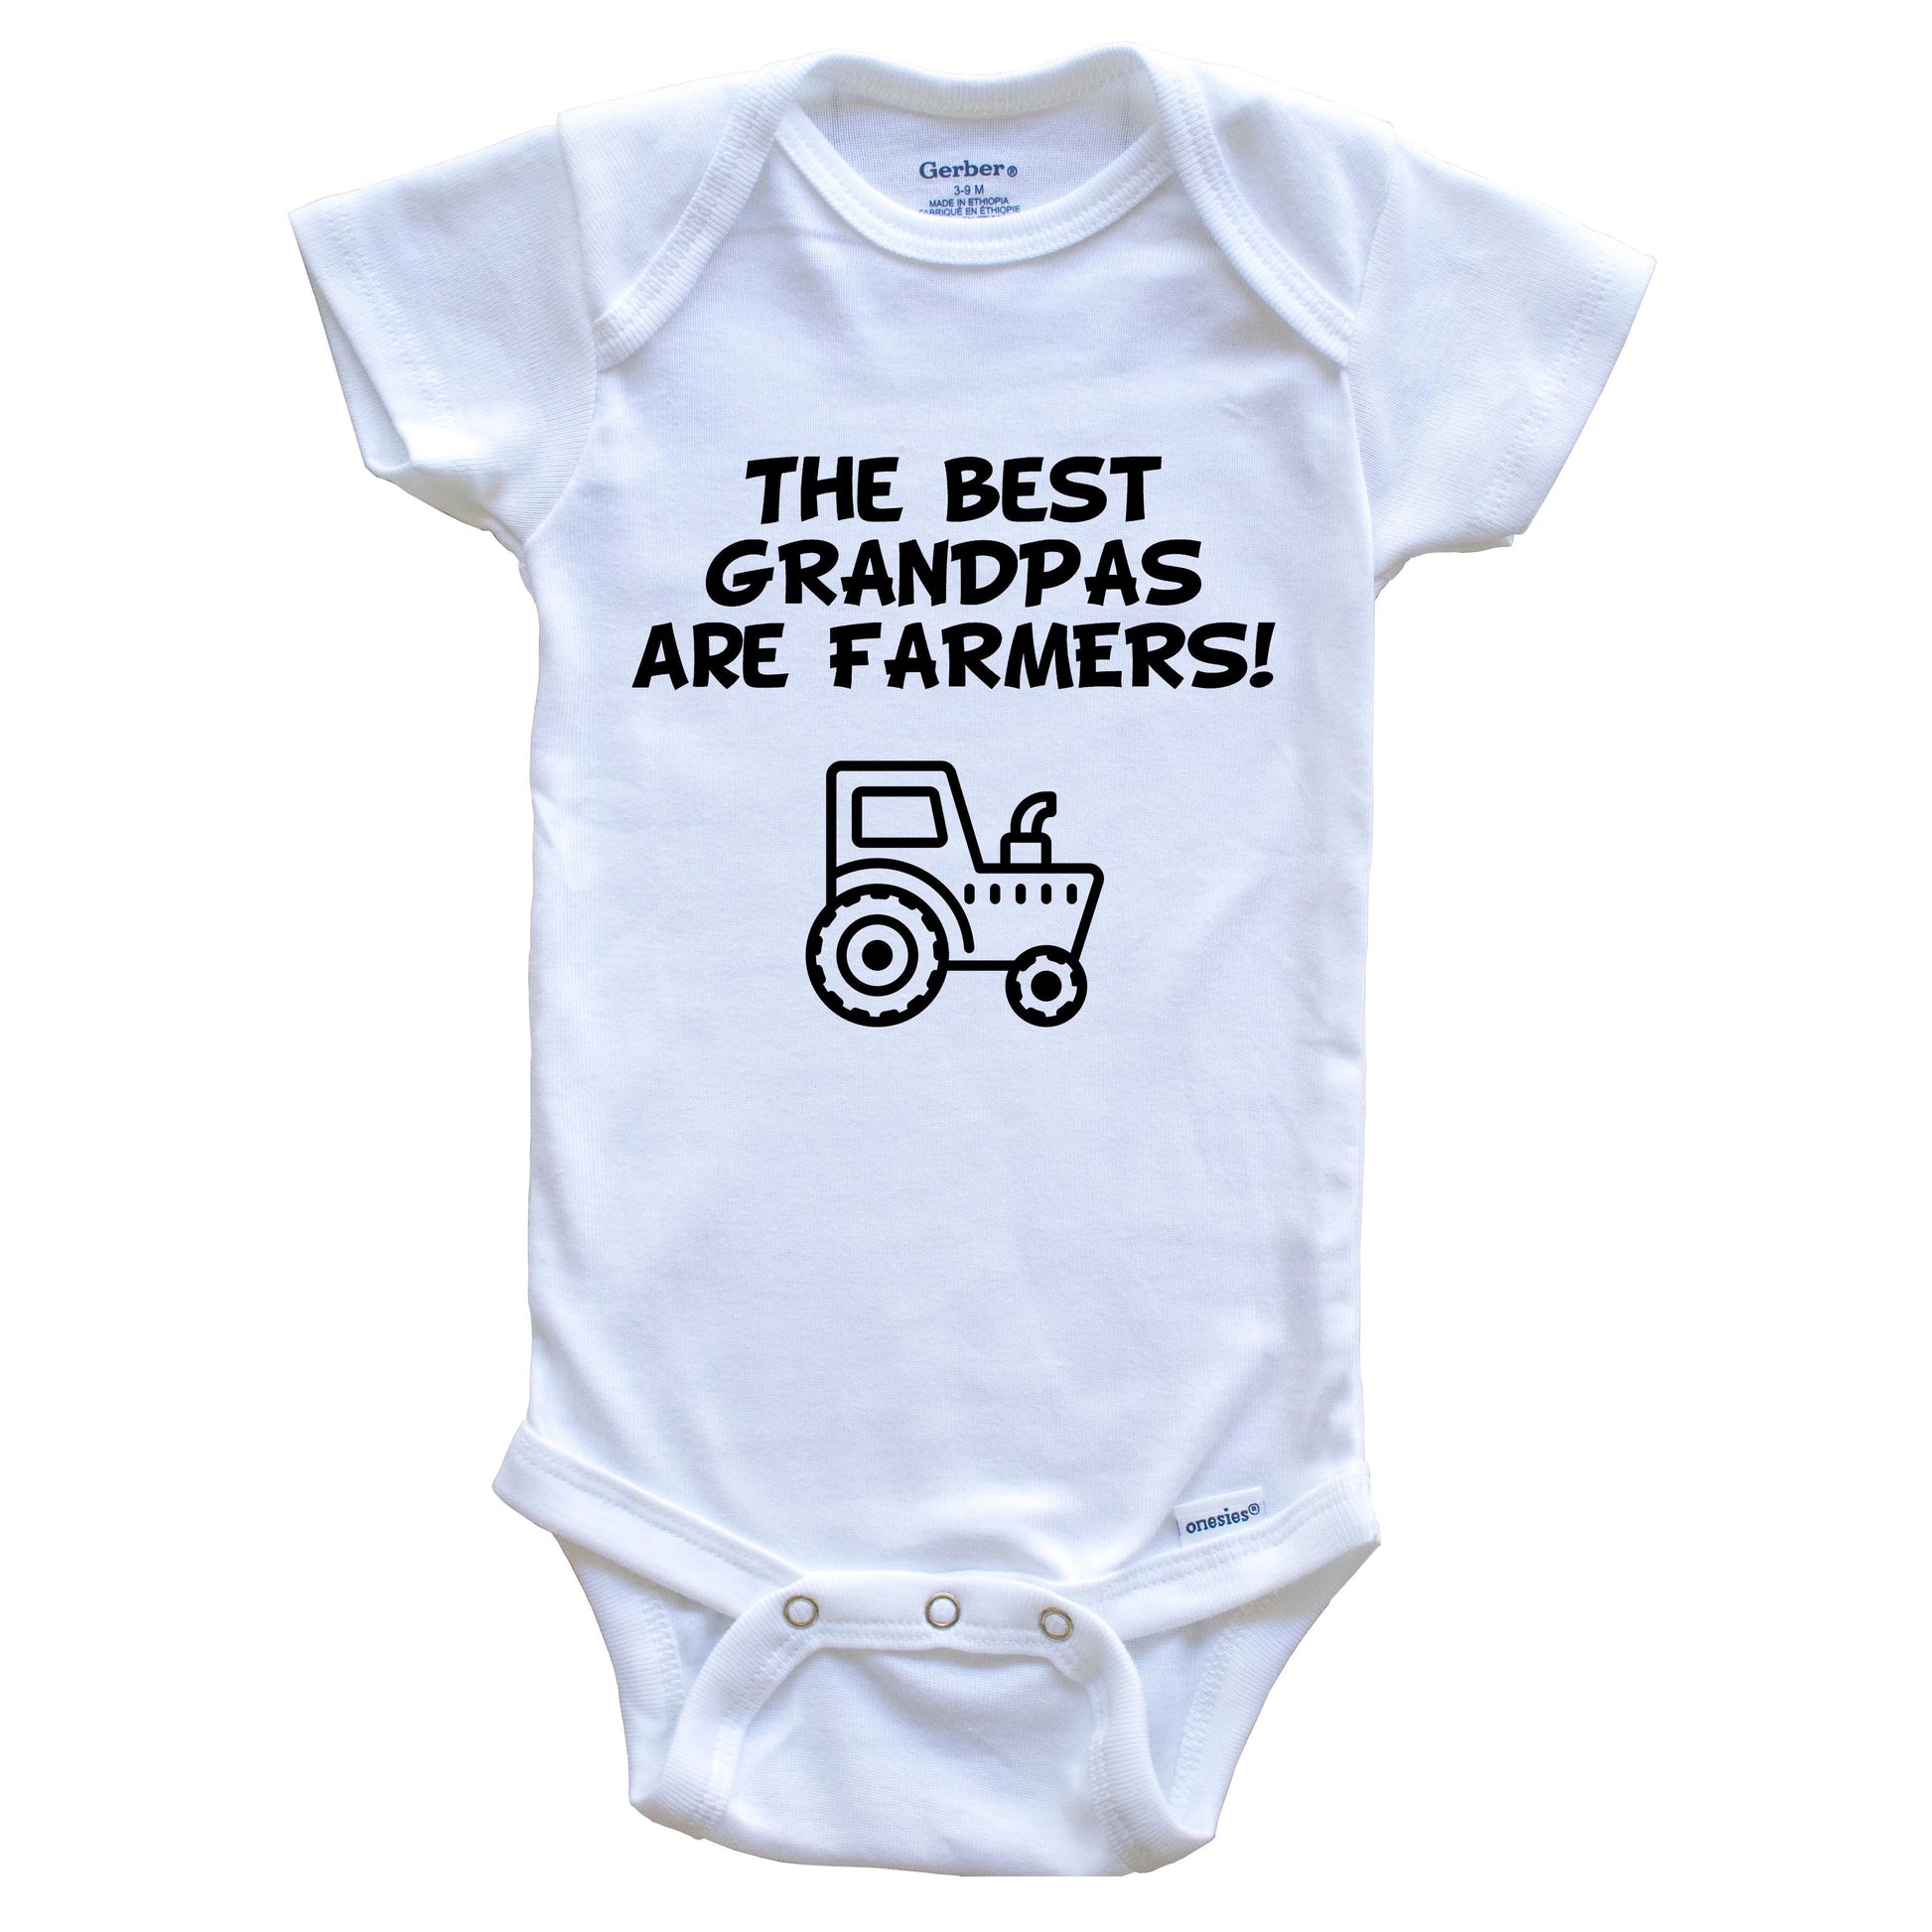 The Best Grandpas Are Farmers Funny Grandchild Baby Onesie